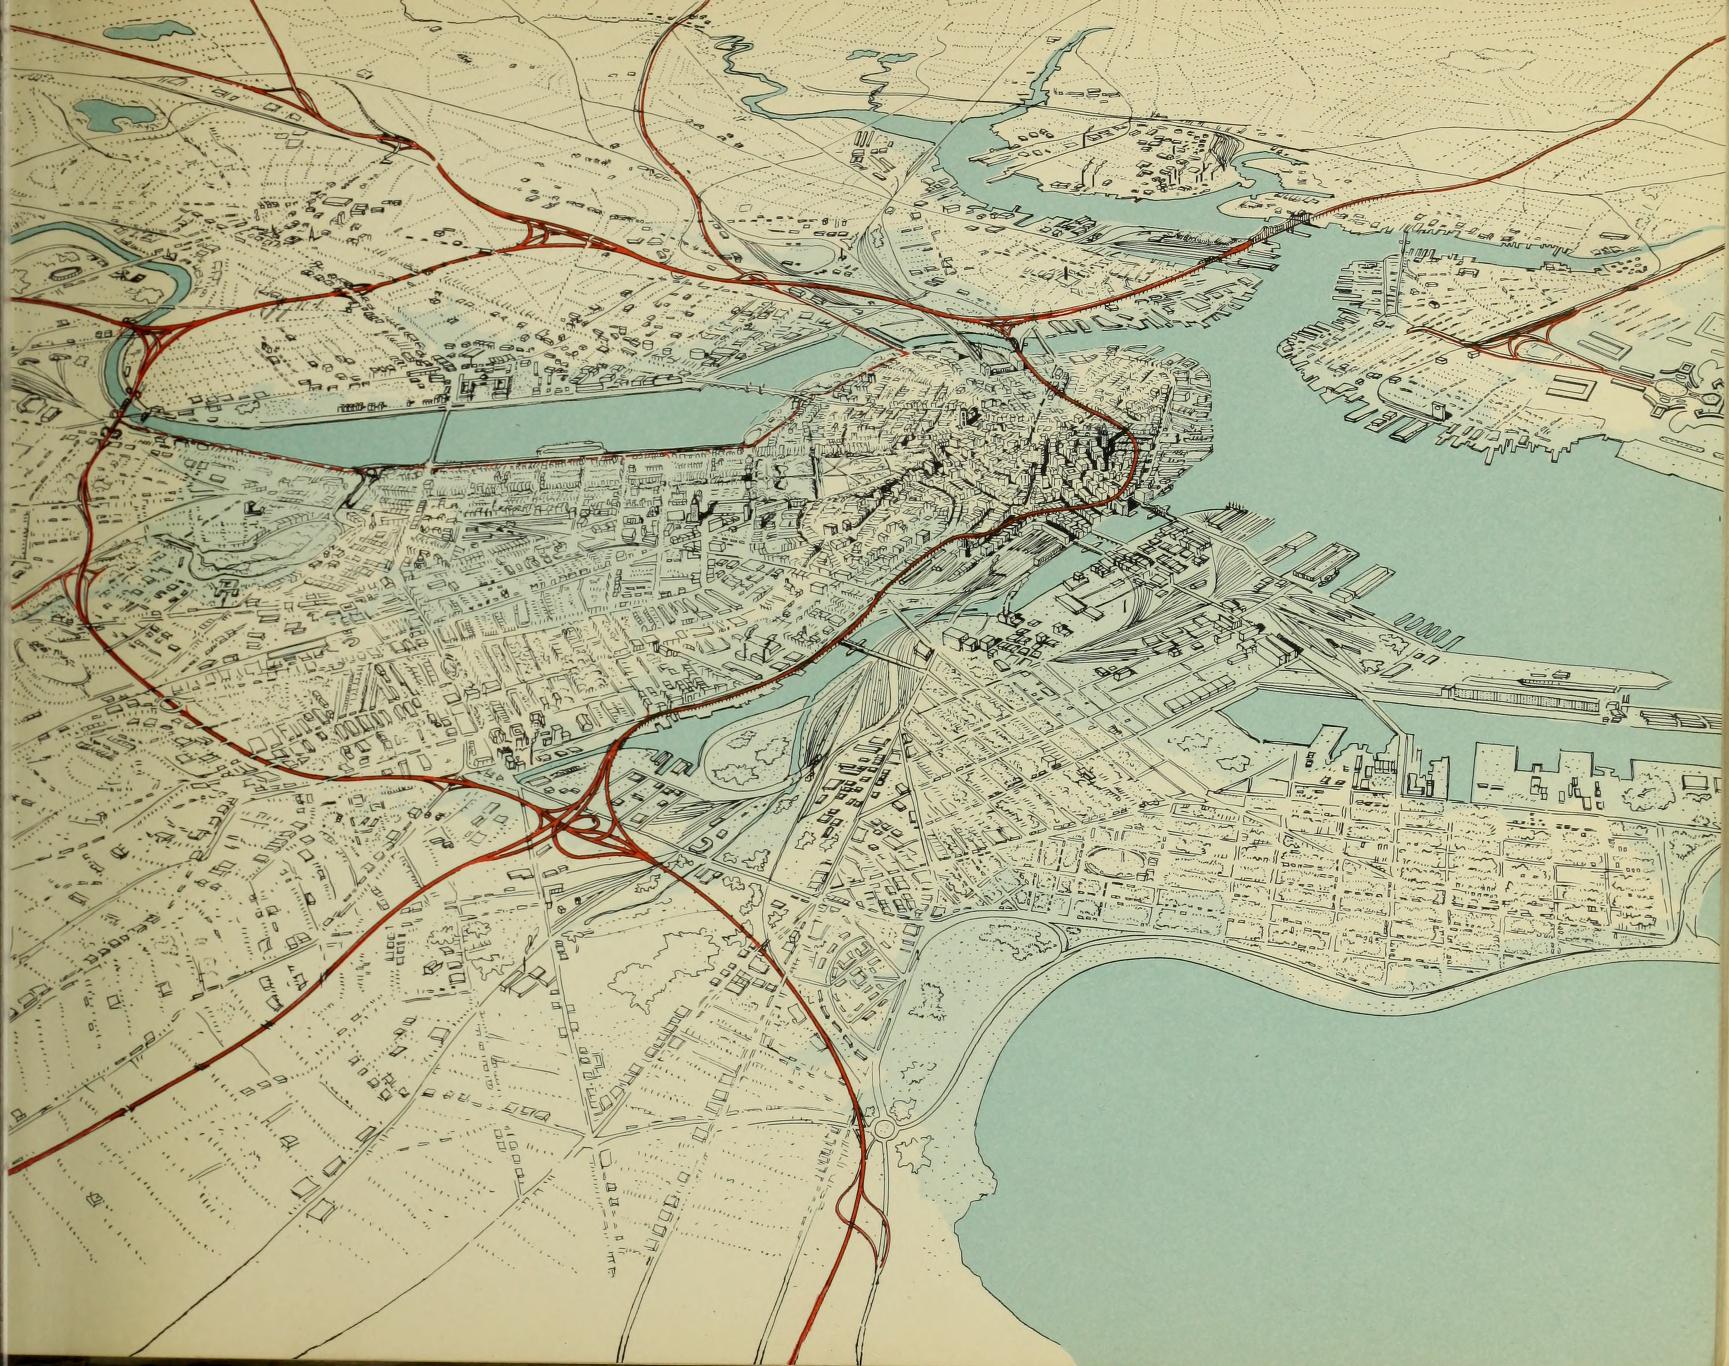 The (unrealized) Metropolitan Master Highway Plan of 1948 